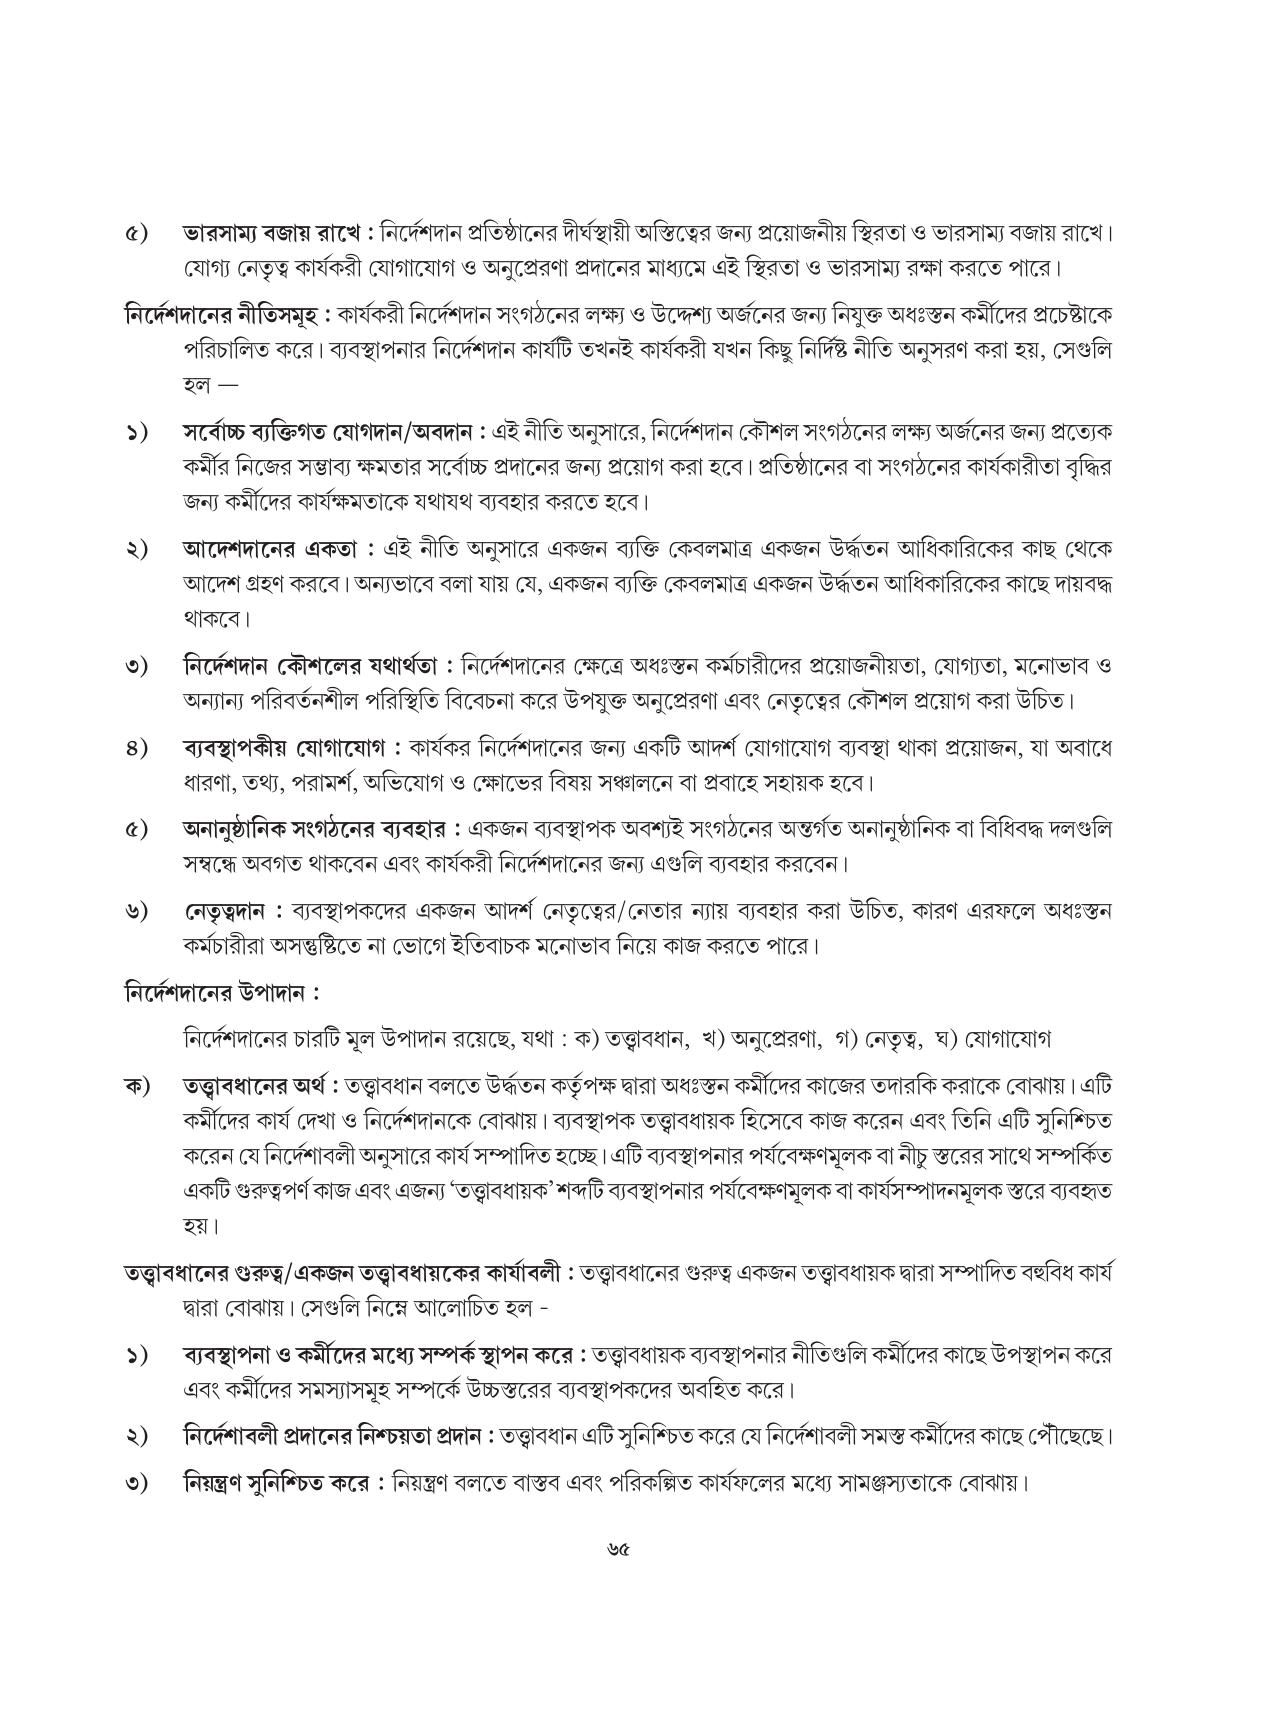 Tripura Board Class 12 Karbari Shastra Bengali Version Workbooks - Page 65